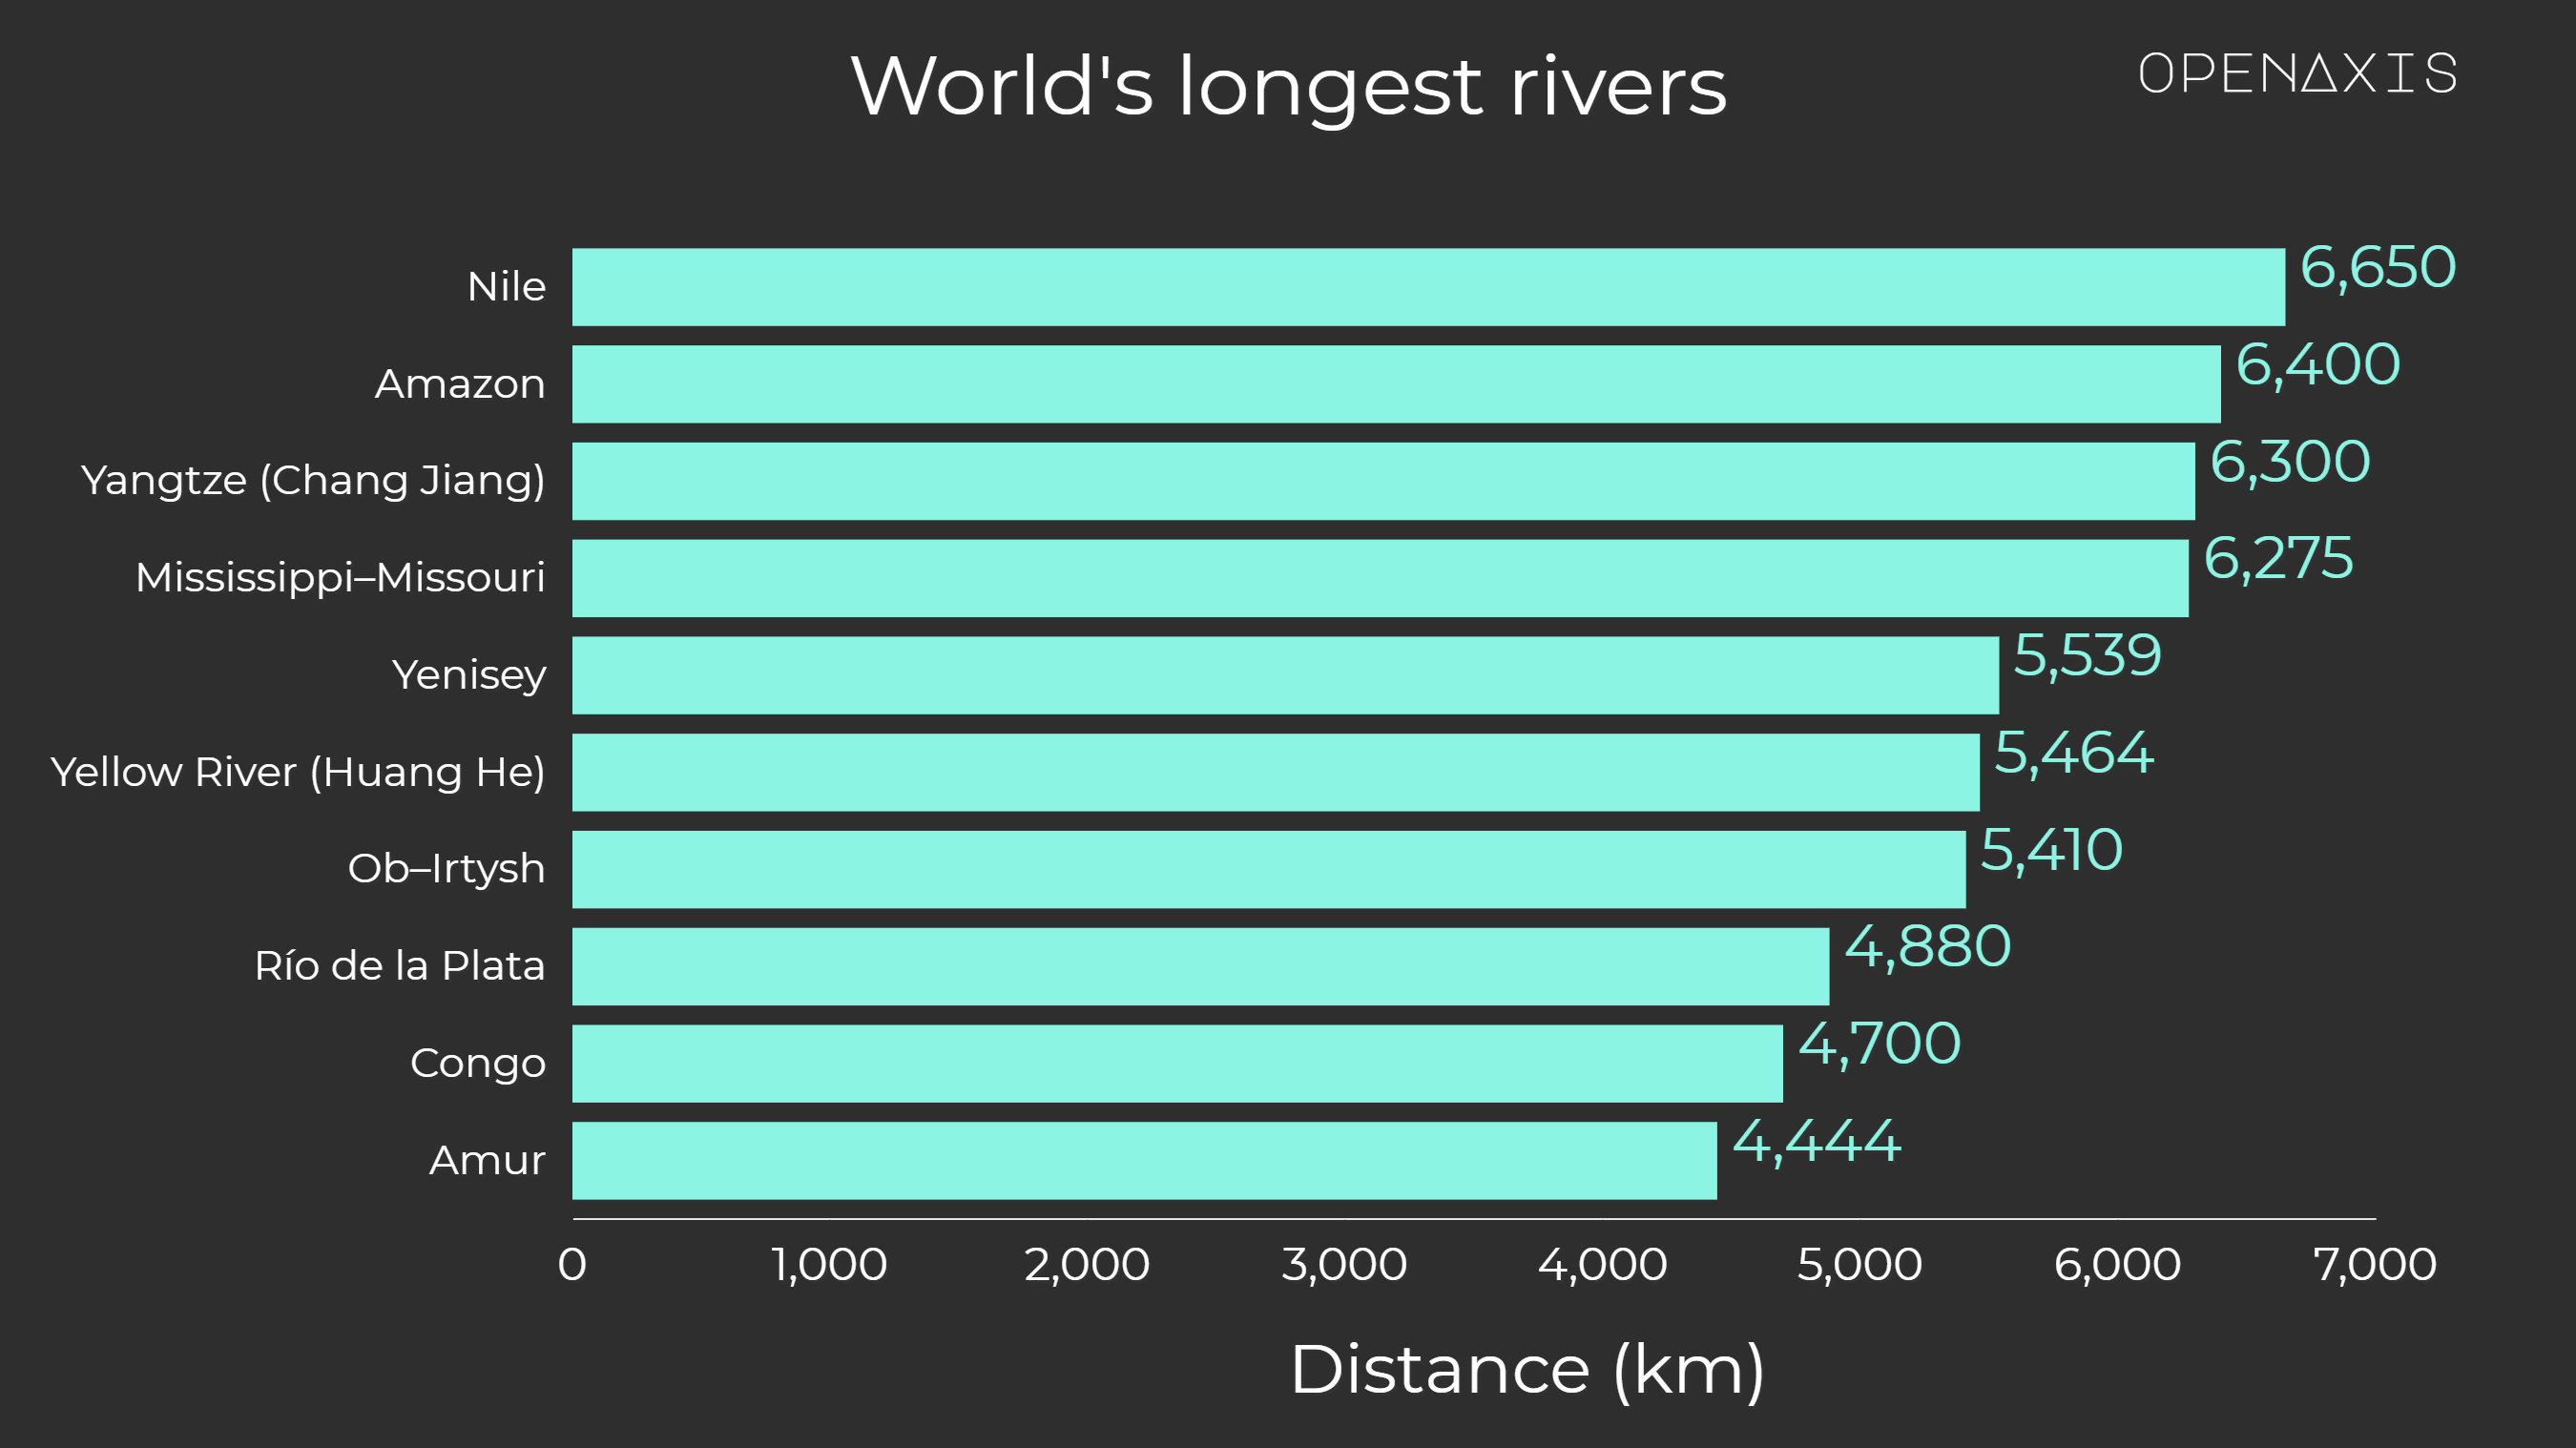 "World's longest rivers"